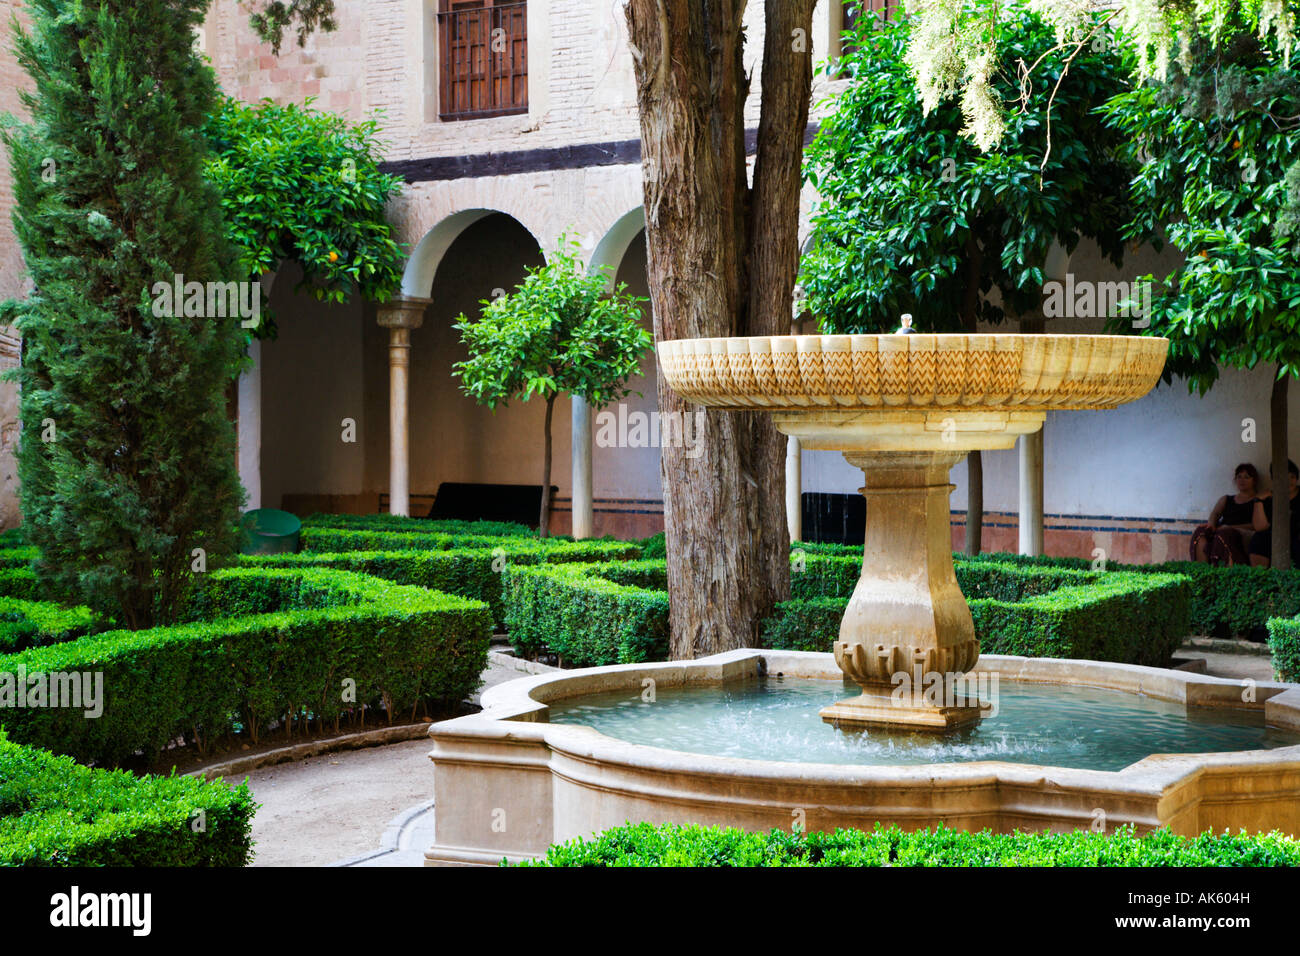 La Cour de Lindaraja Patio de los Leones de l'Alhambra Grenade Espagne Banque D'Images